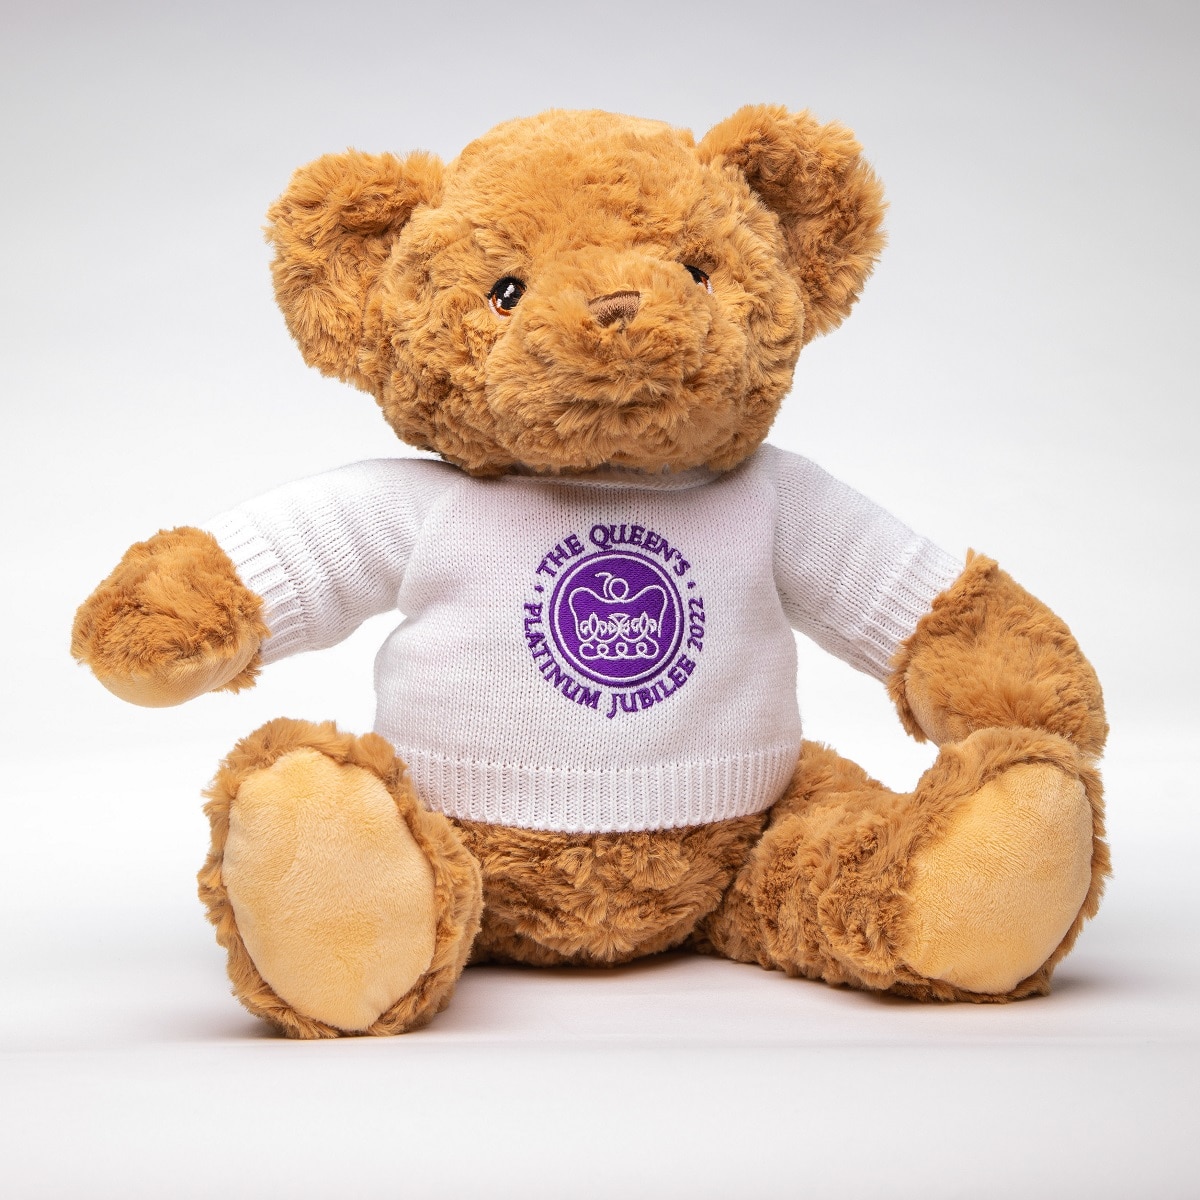 Queen Elizabeth II platinum jubilee 2022 collectable large teddy bear